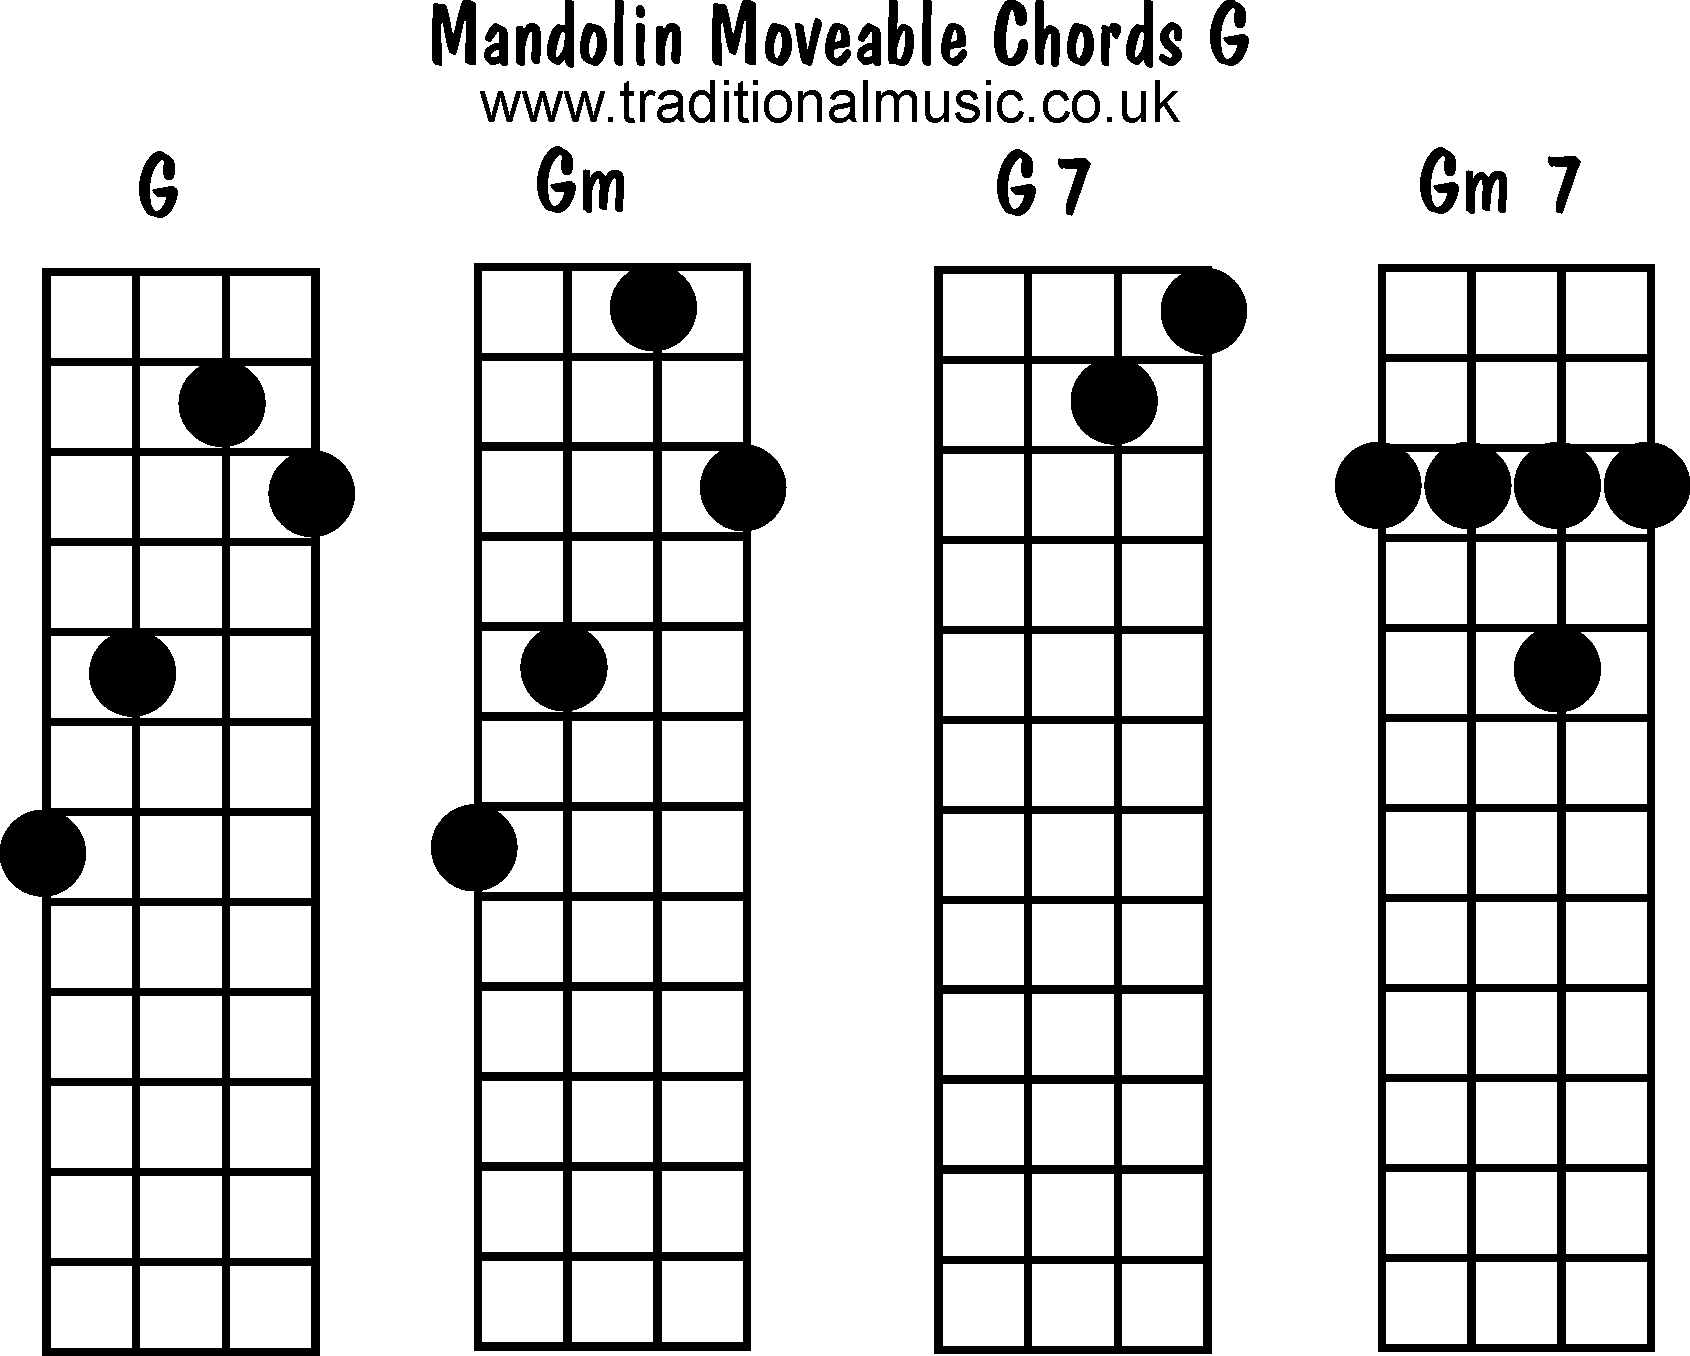 Moveable mandolin chords: G, Gm, G7, Gm7